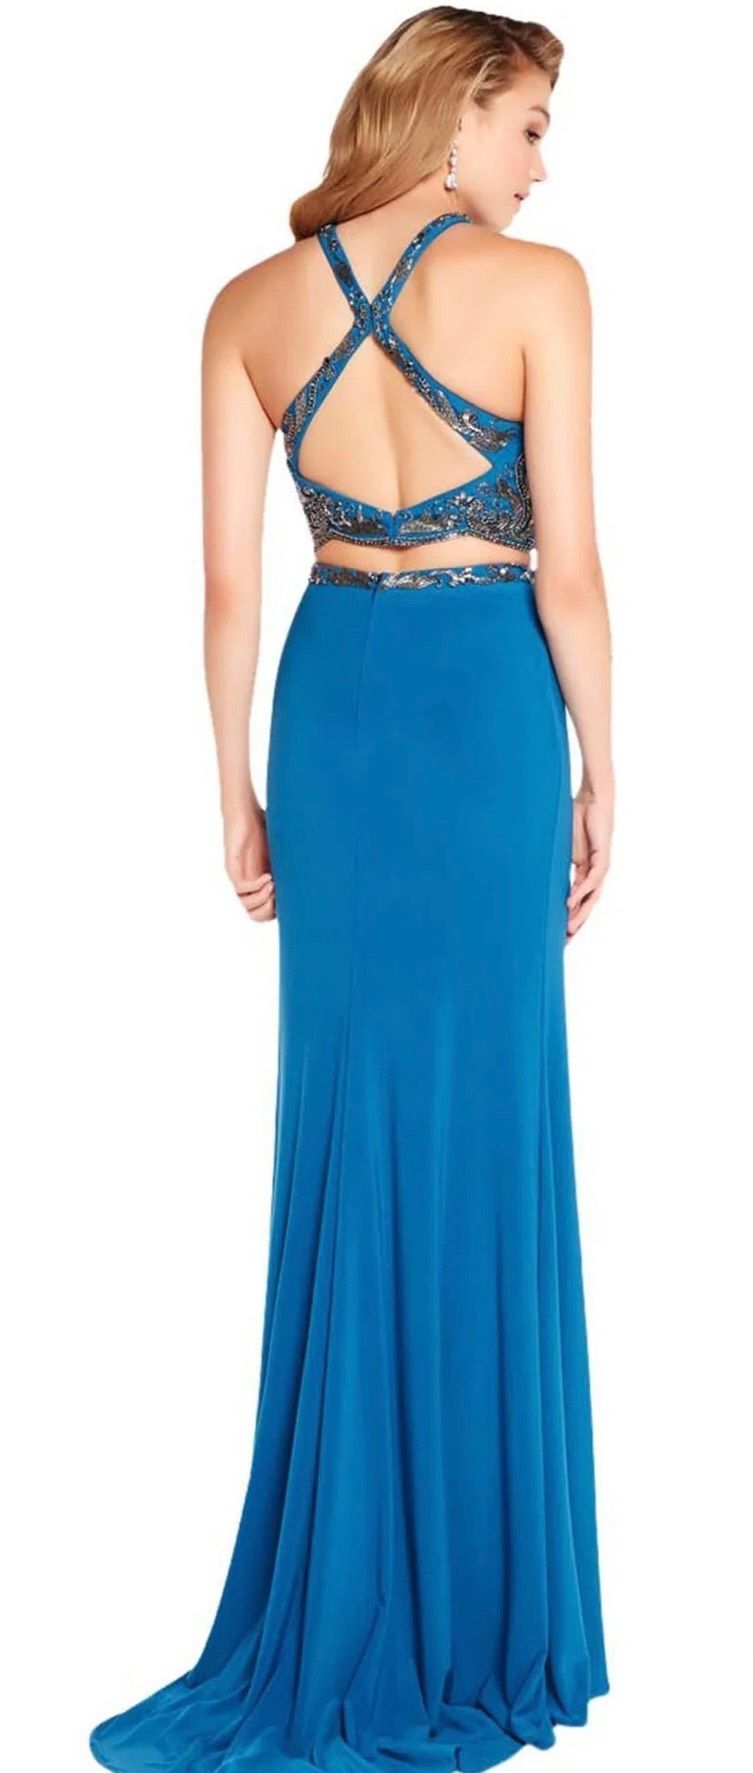 Alyce Paris Size 6 Halter Blue Mermaid Dress on Queenly